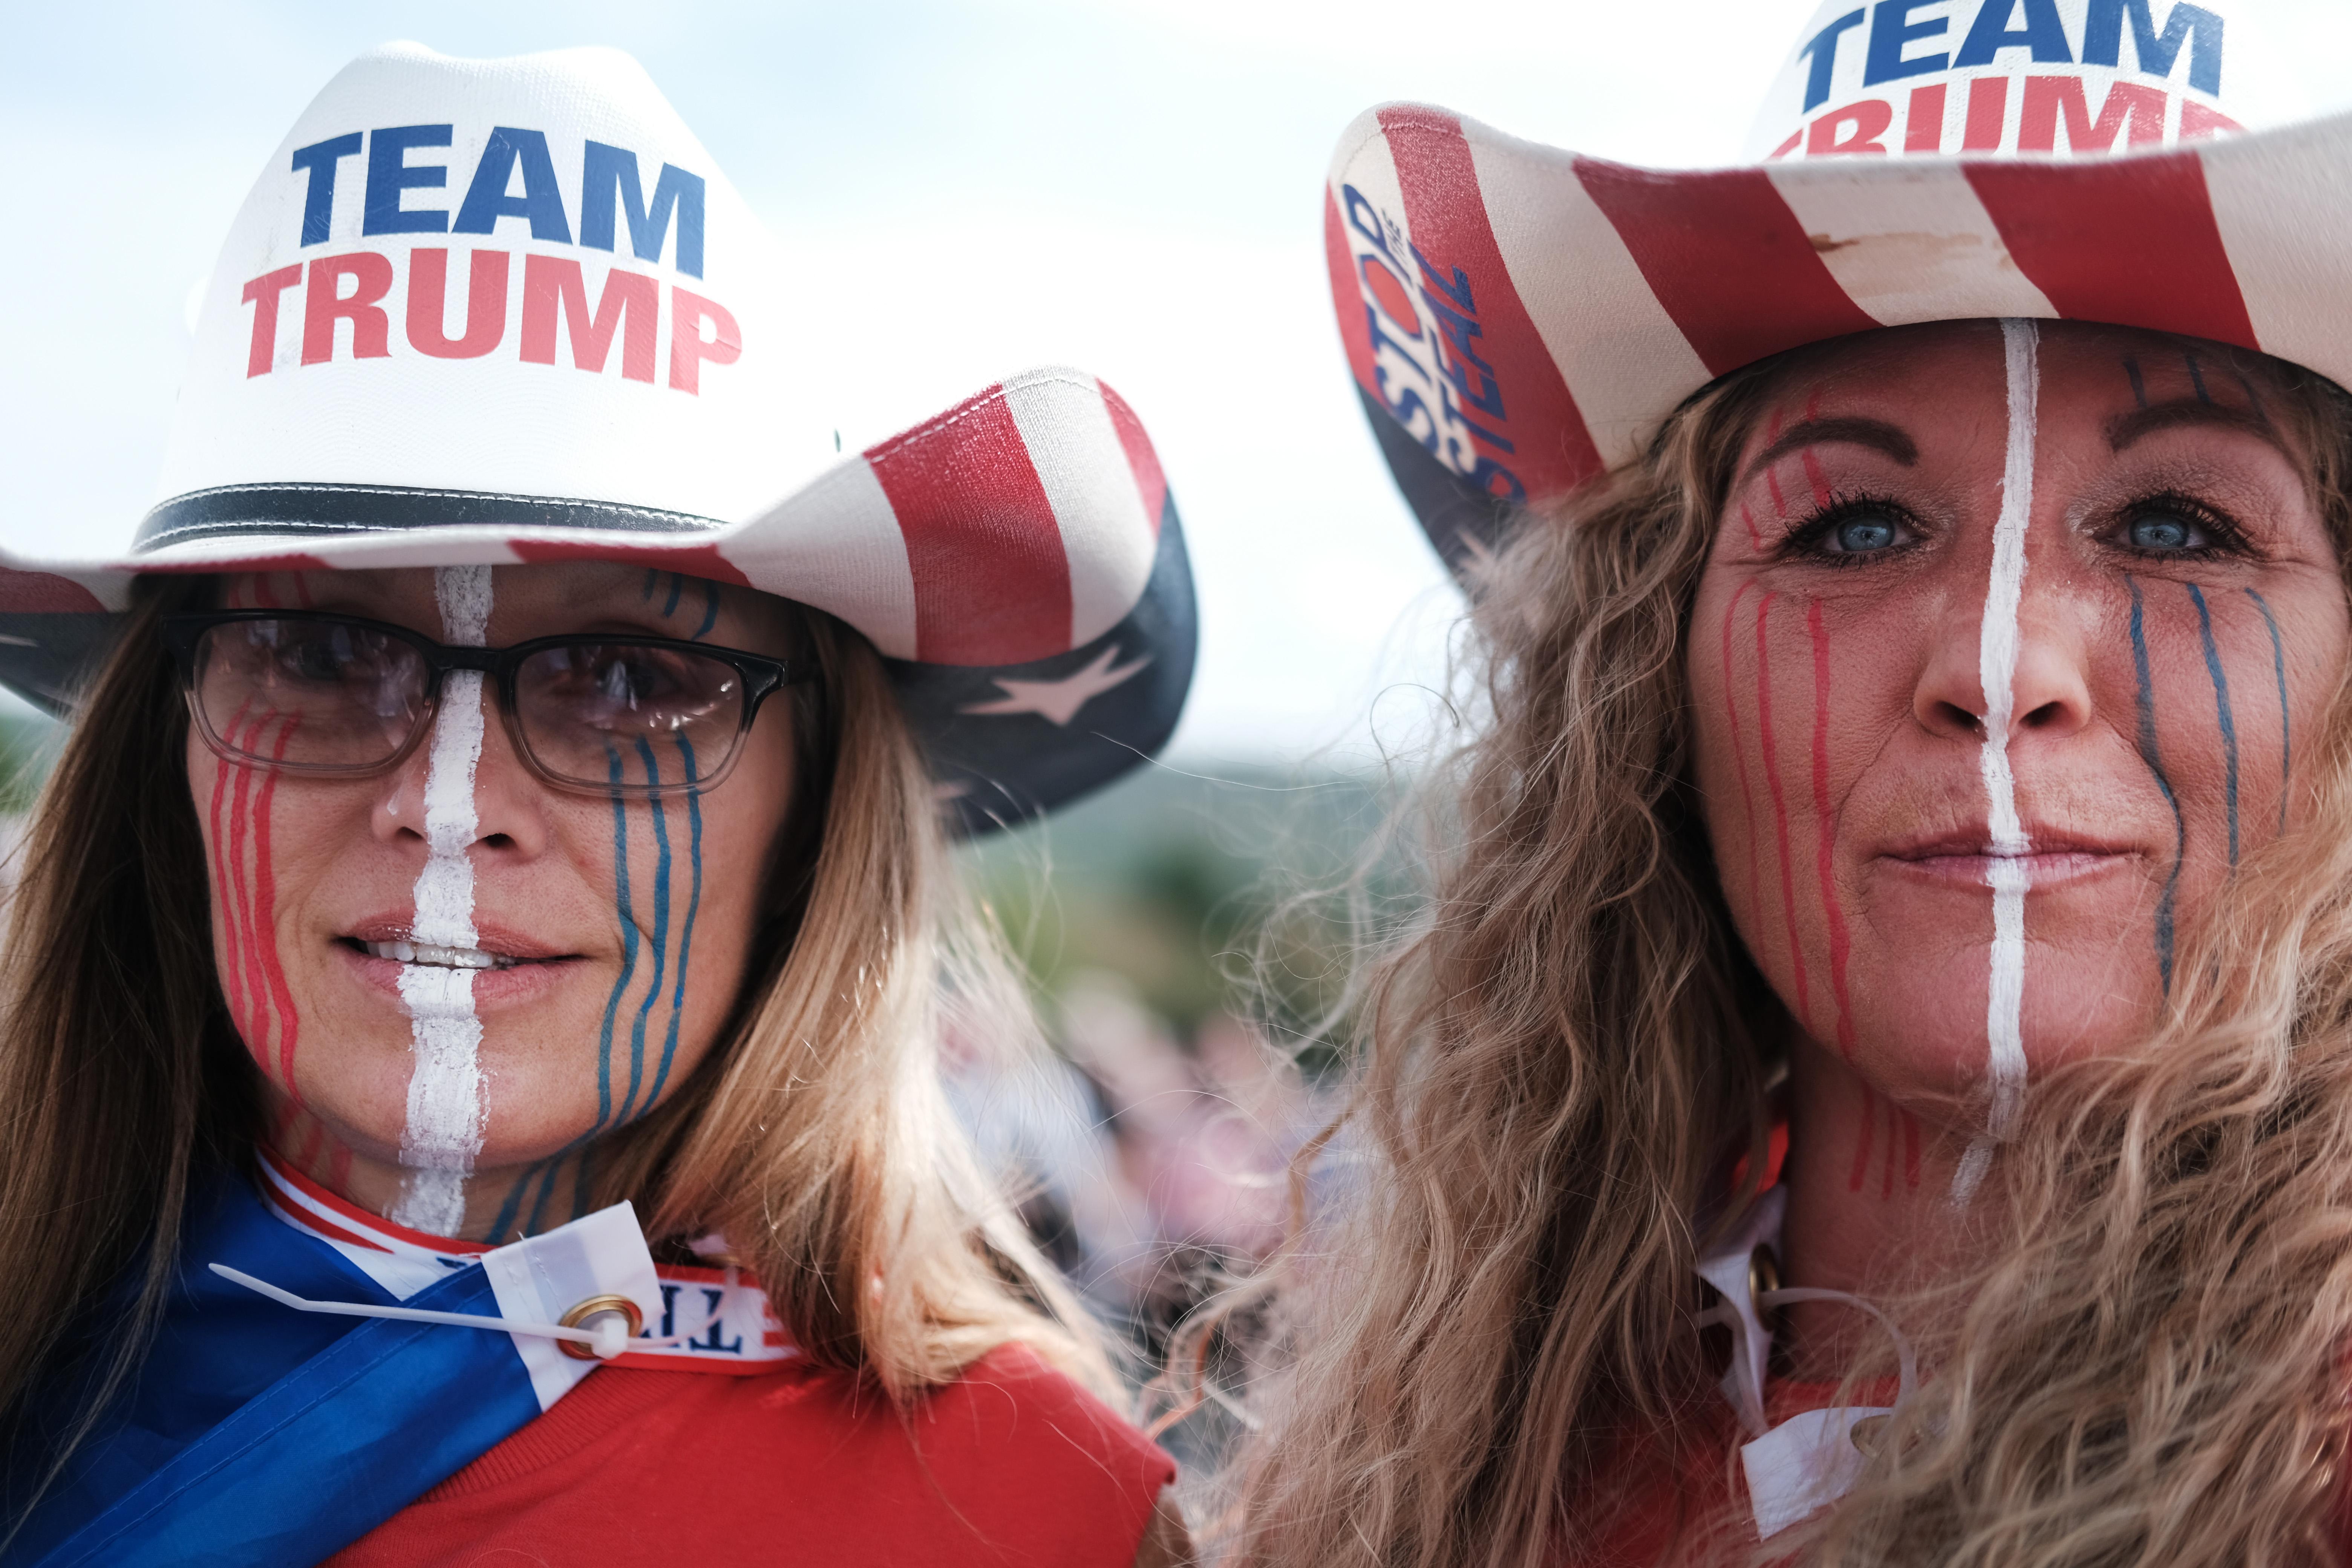 Two women in face paint wearing "Team Trump" hats.